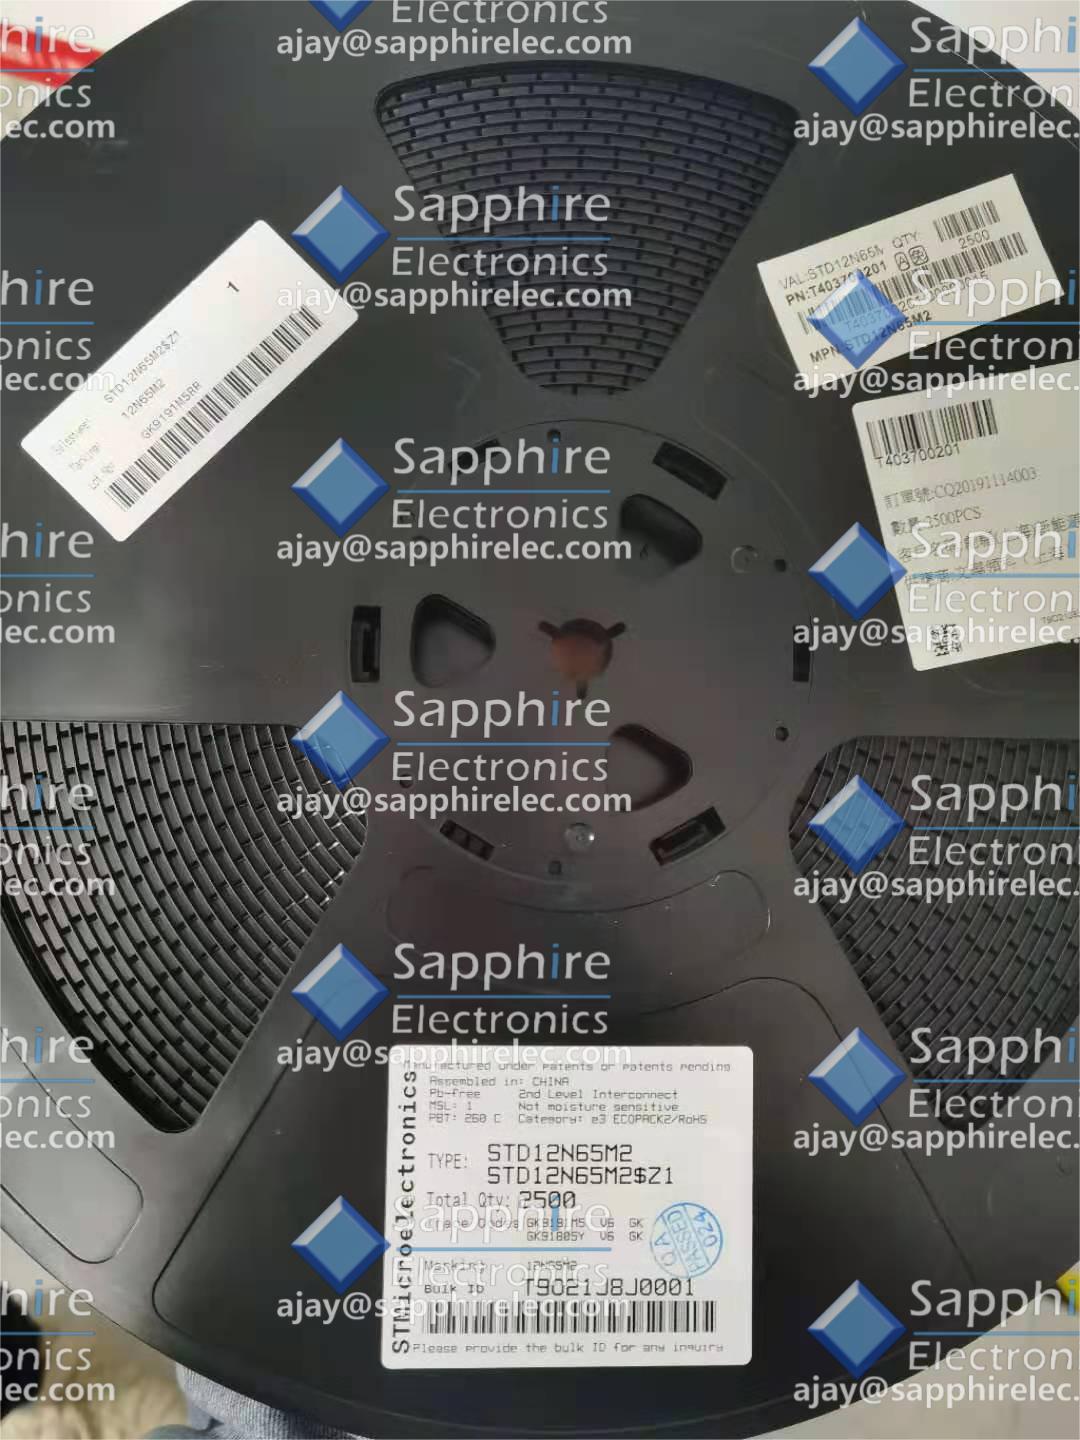 Sapphire

Electronics
ajay@sapphirelec.com